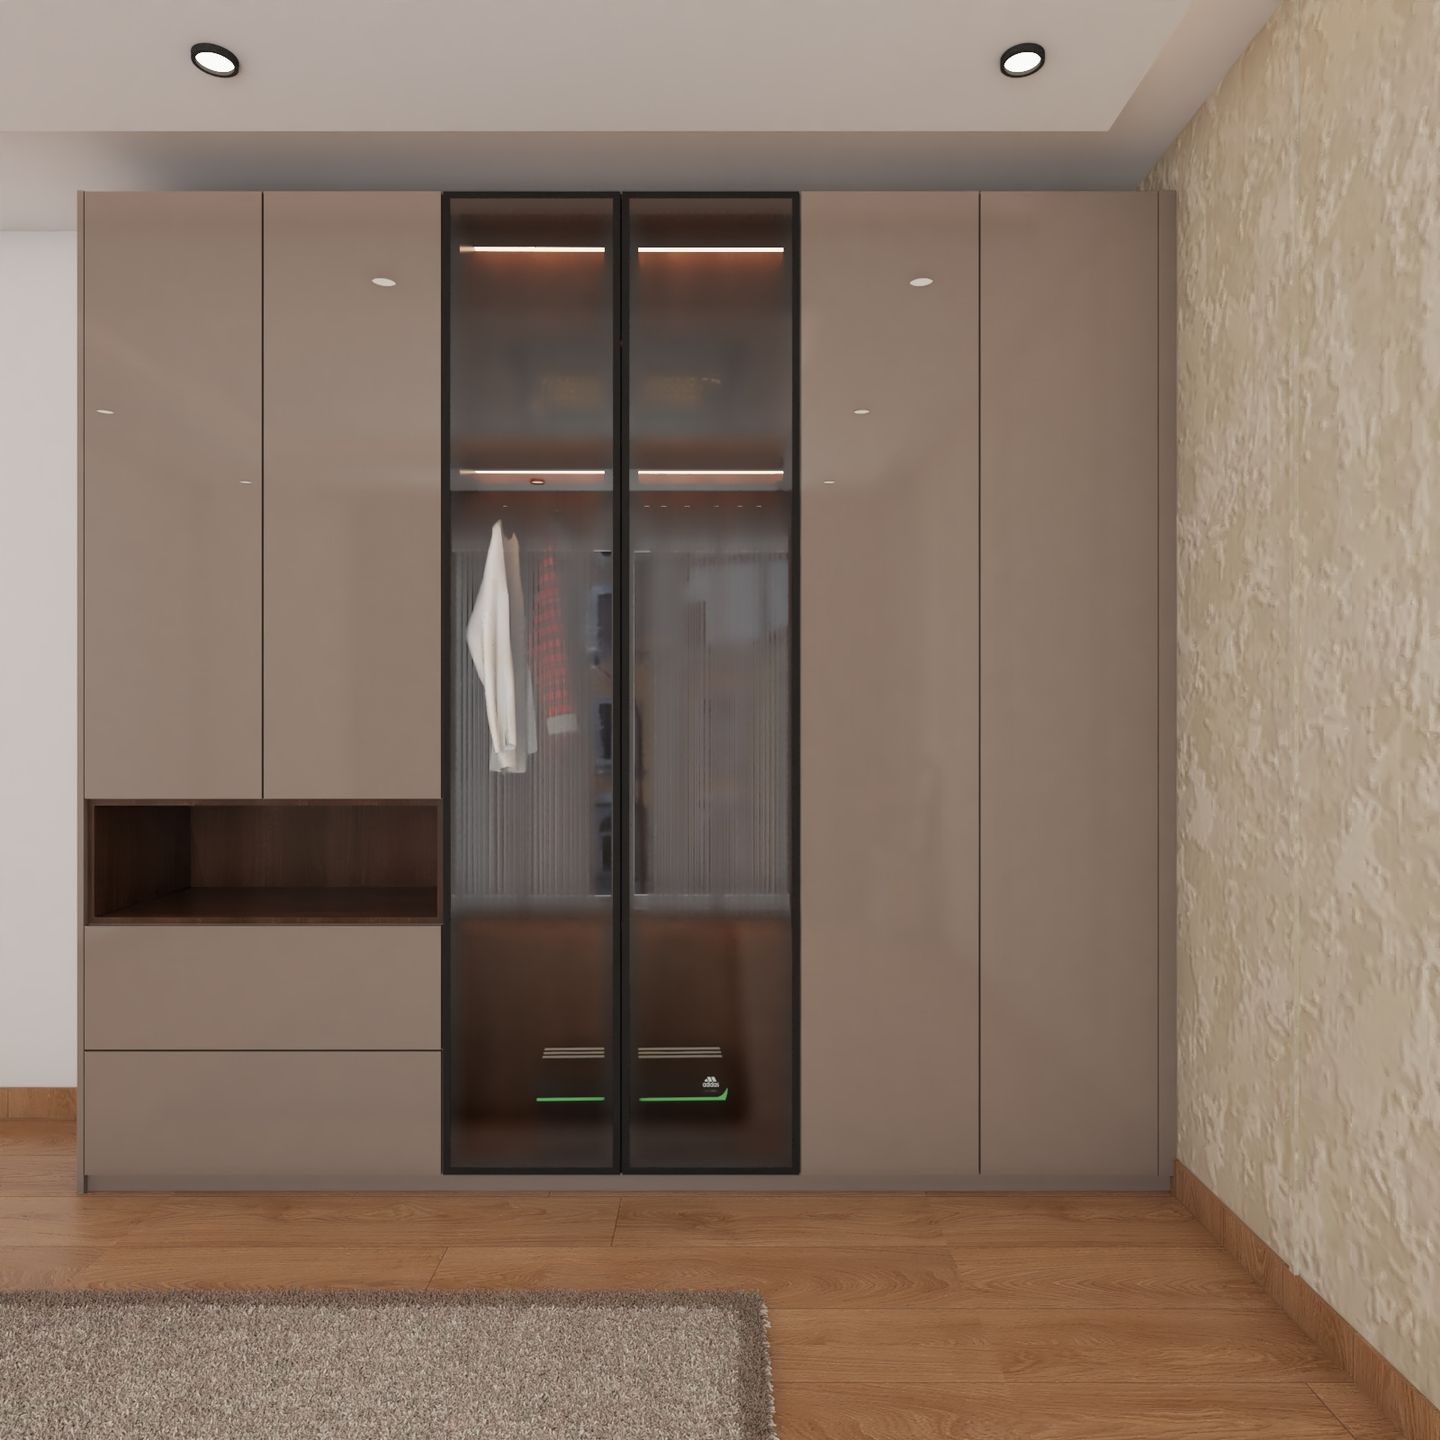 6 Door Swing Wardrobe Design With Acrylic Gloss Finish - Livspace